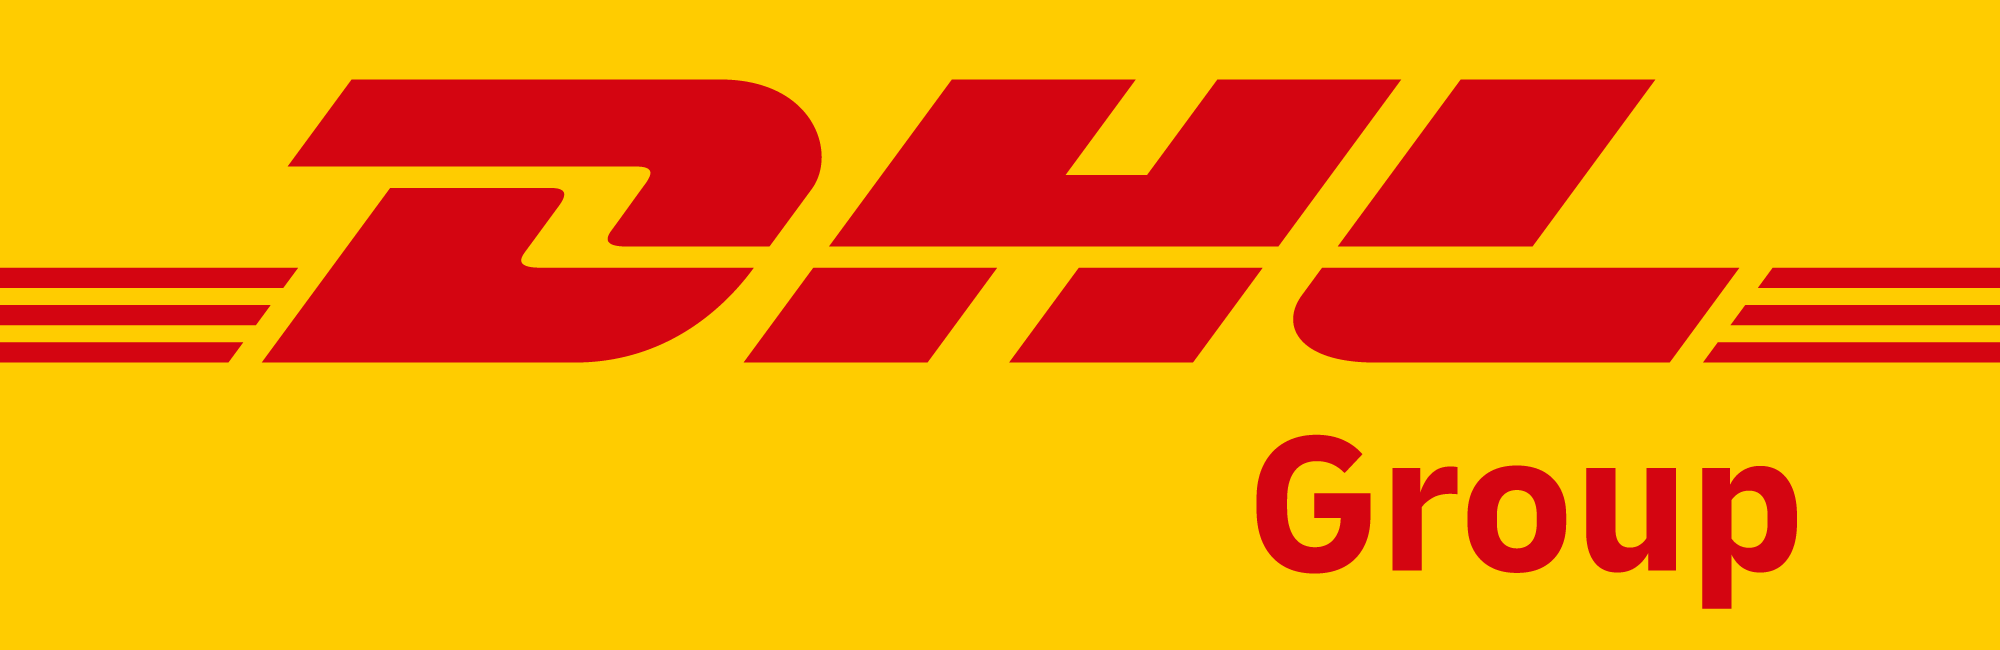 DHL